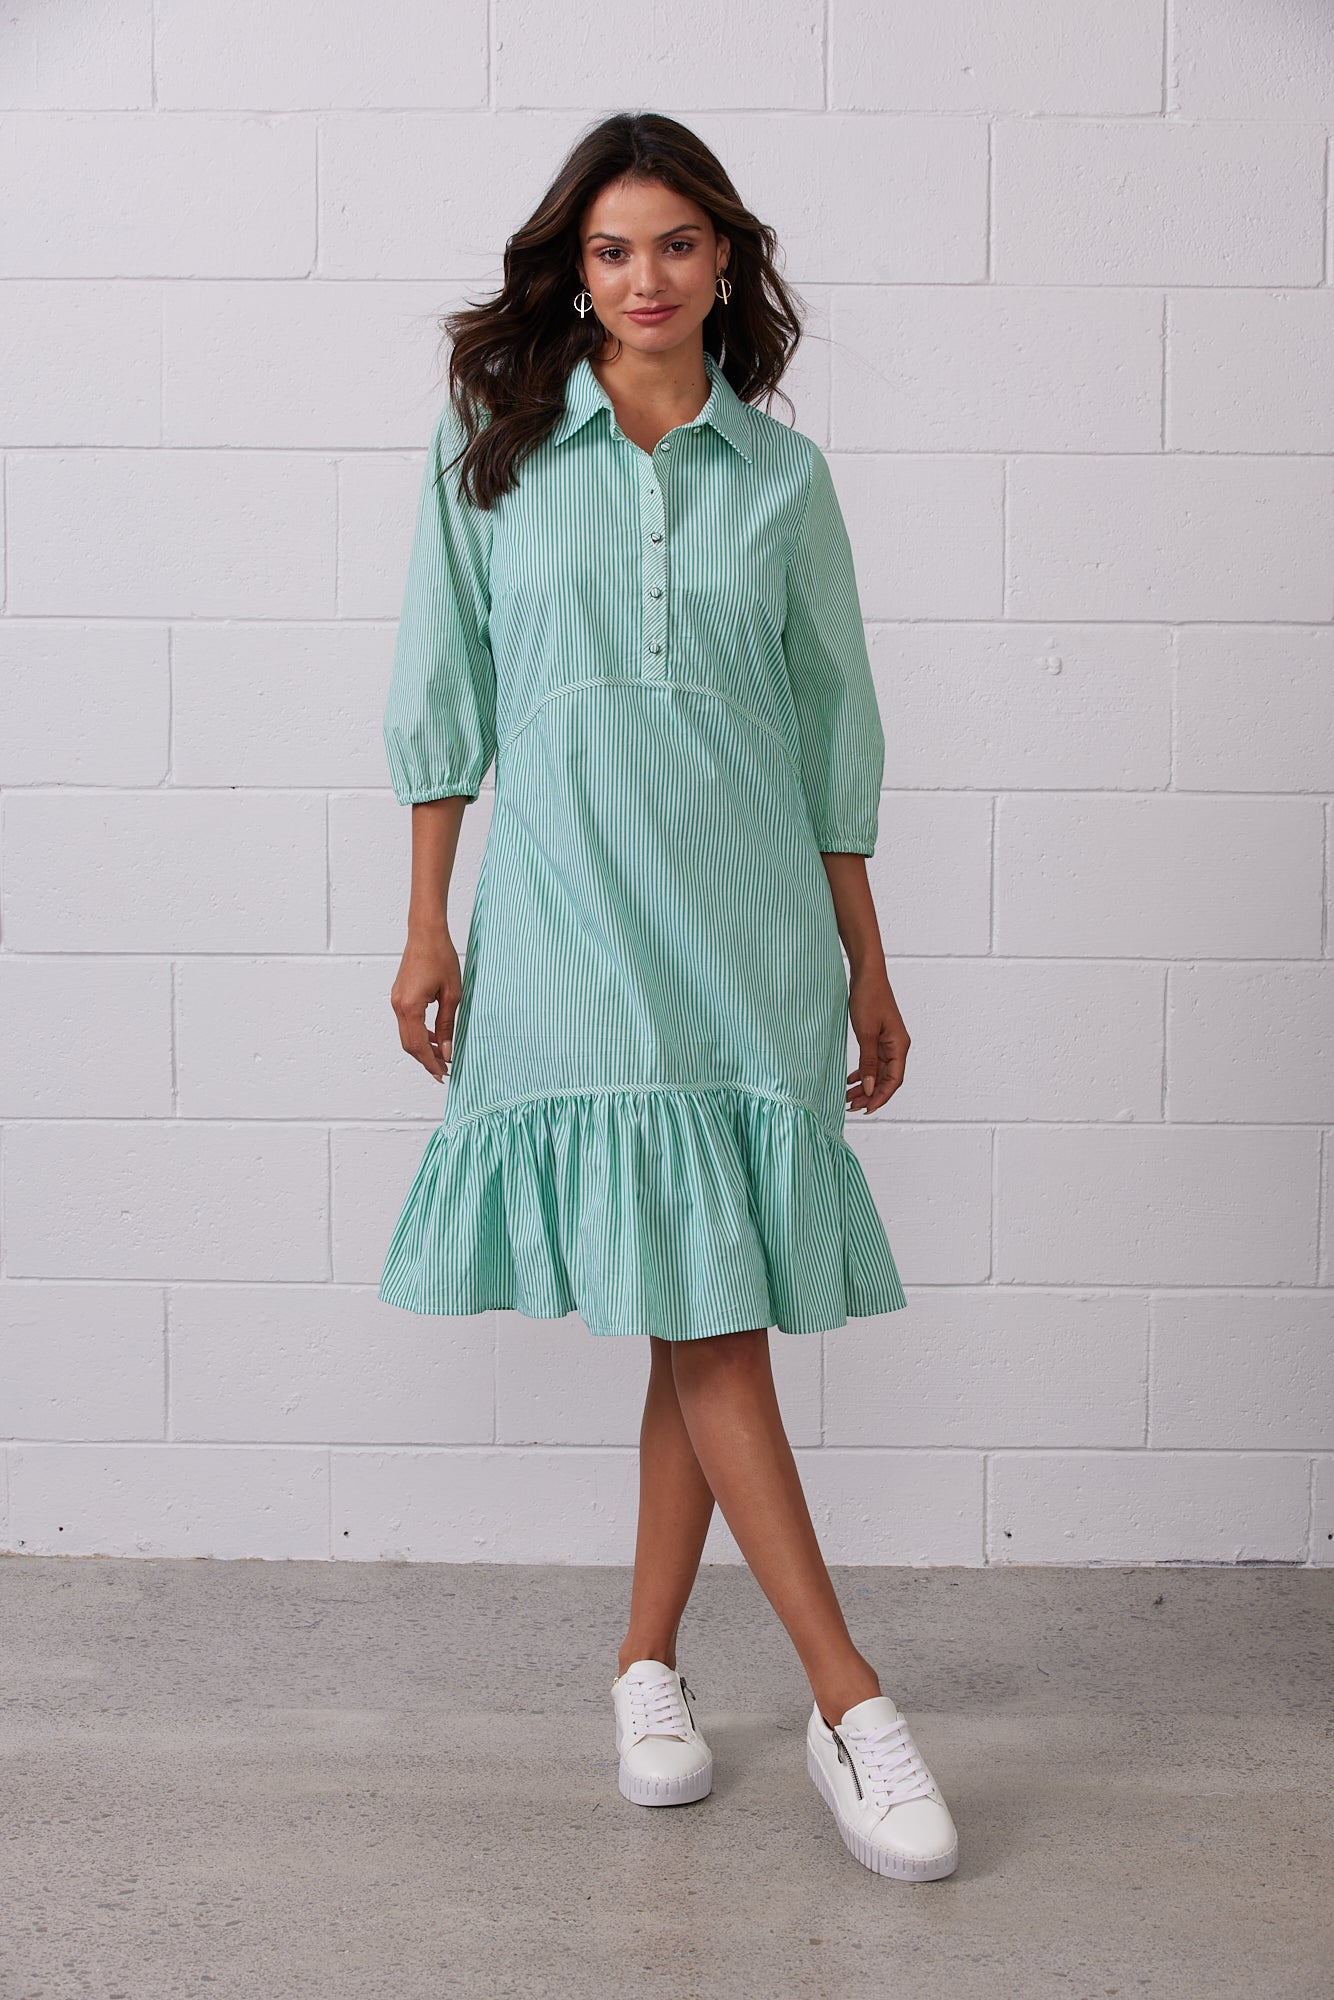 Newport - NP27726 - Lori Cotton Dress - Green Stripe - 50% Off 1 x 10 left